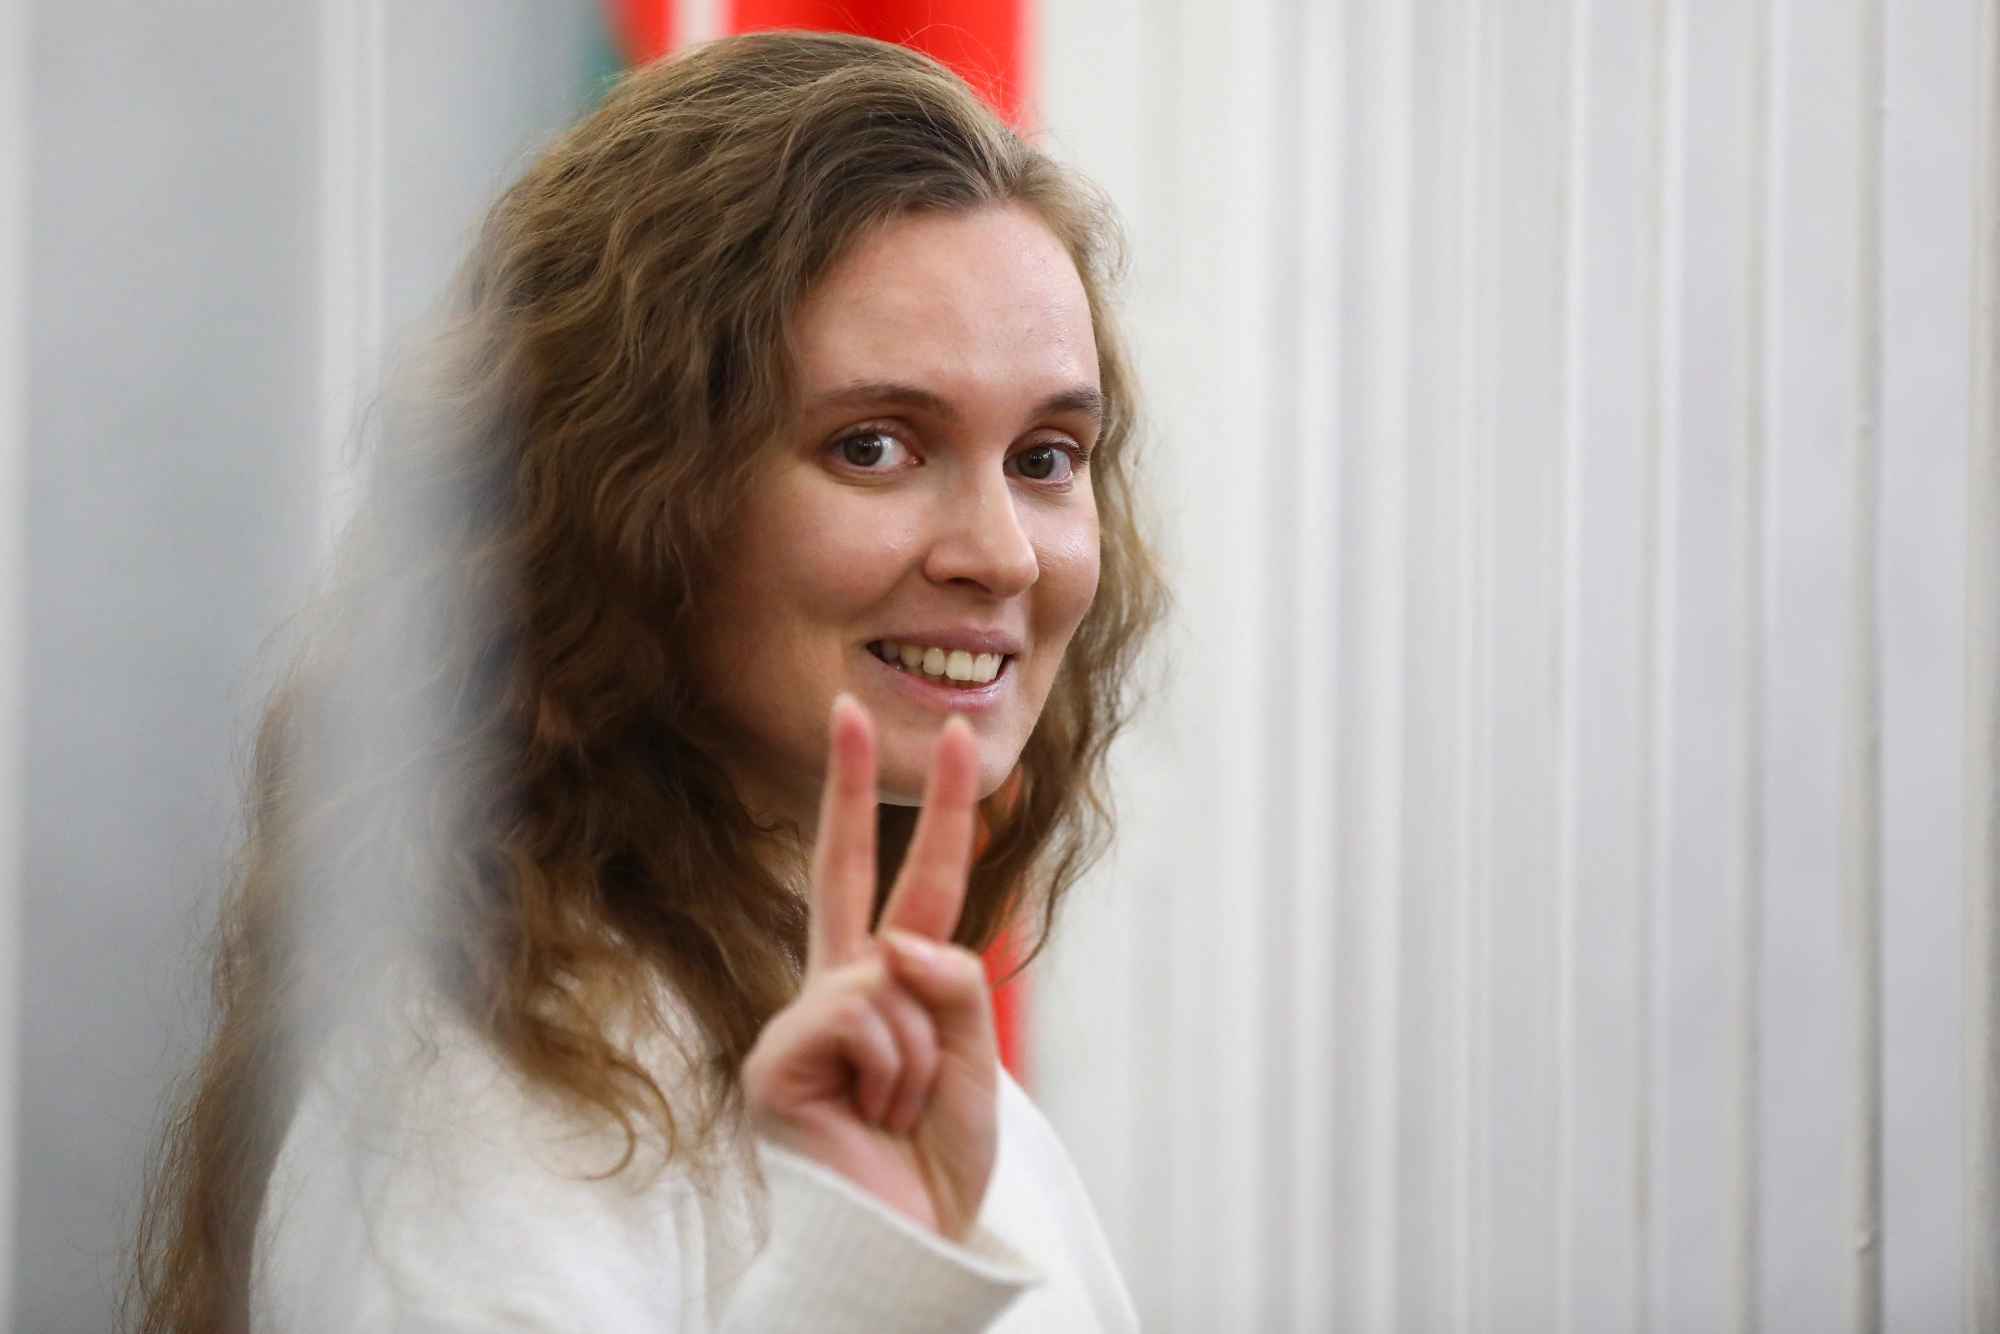 Journalist- Belarus journalist Katsiaryna Andreyeva